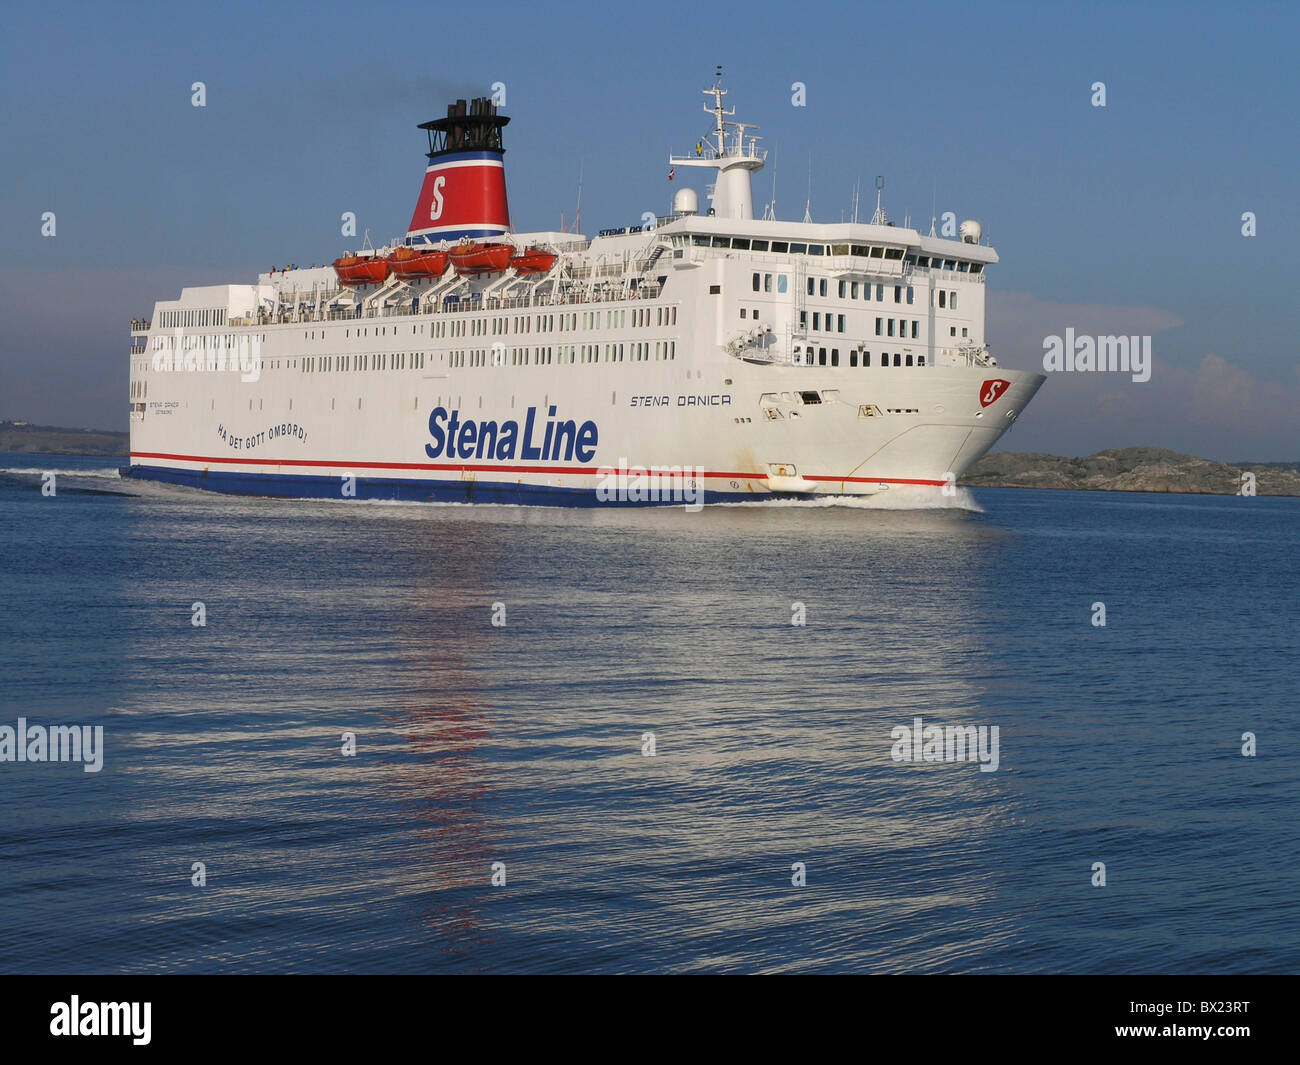 Auto bateau ferry ferry Stena Line navire mer Suède Europe Danemark Europe transports circulation wat Banque D'Images